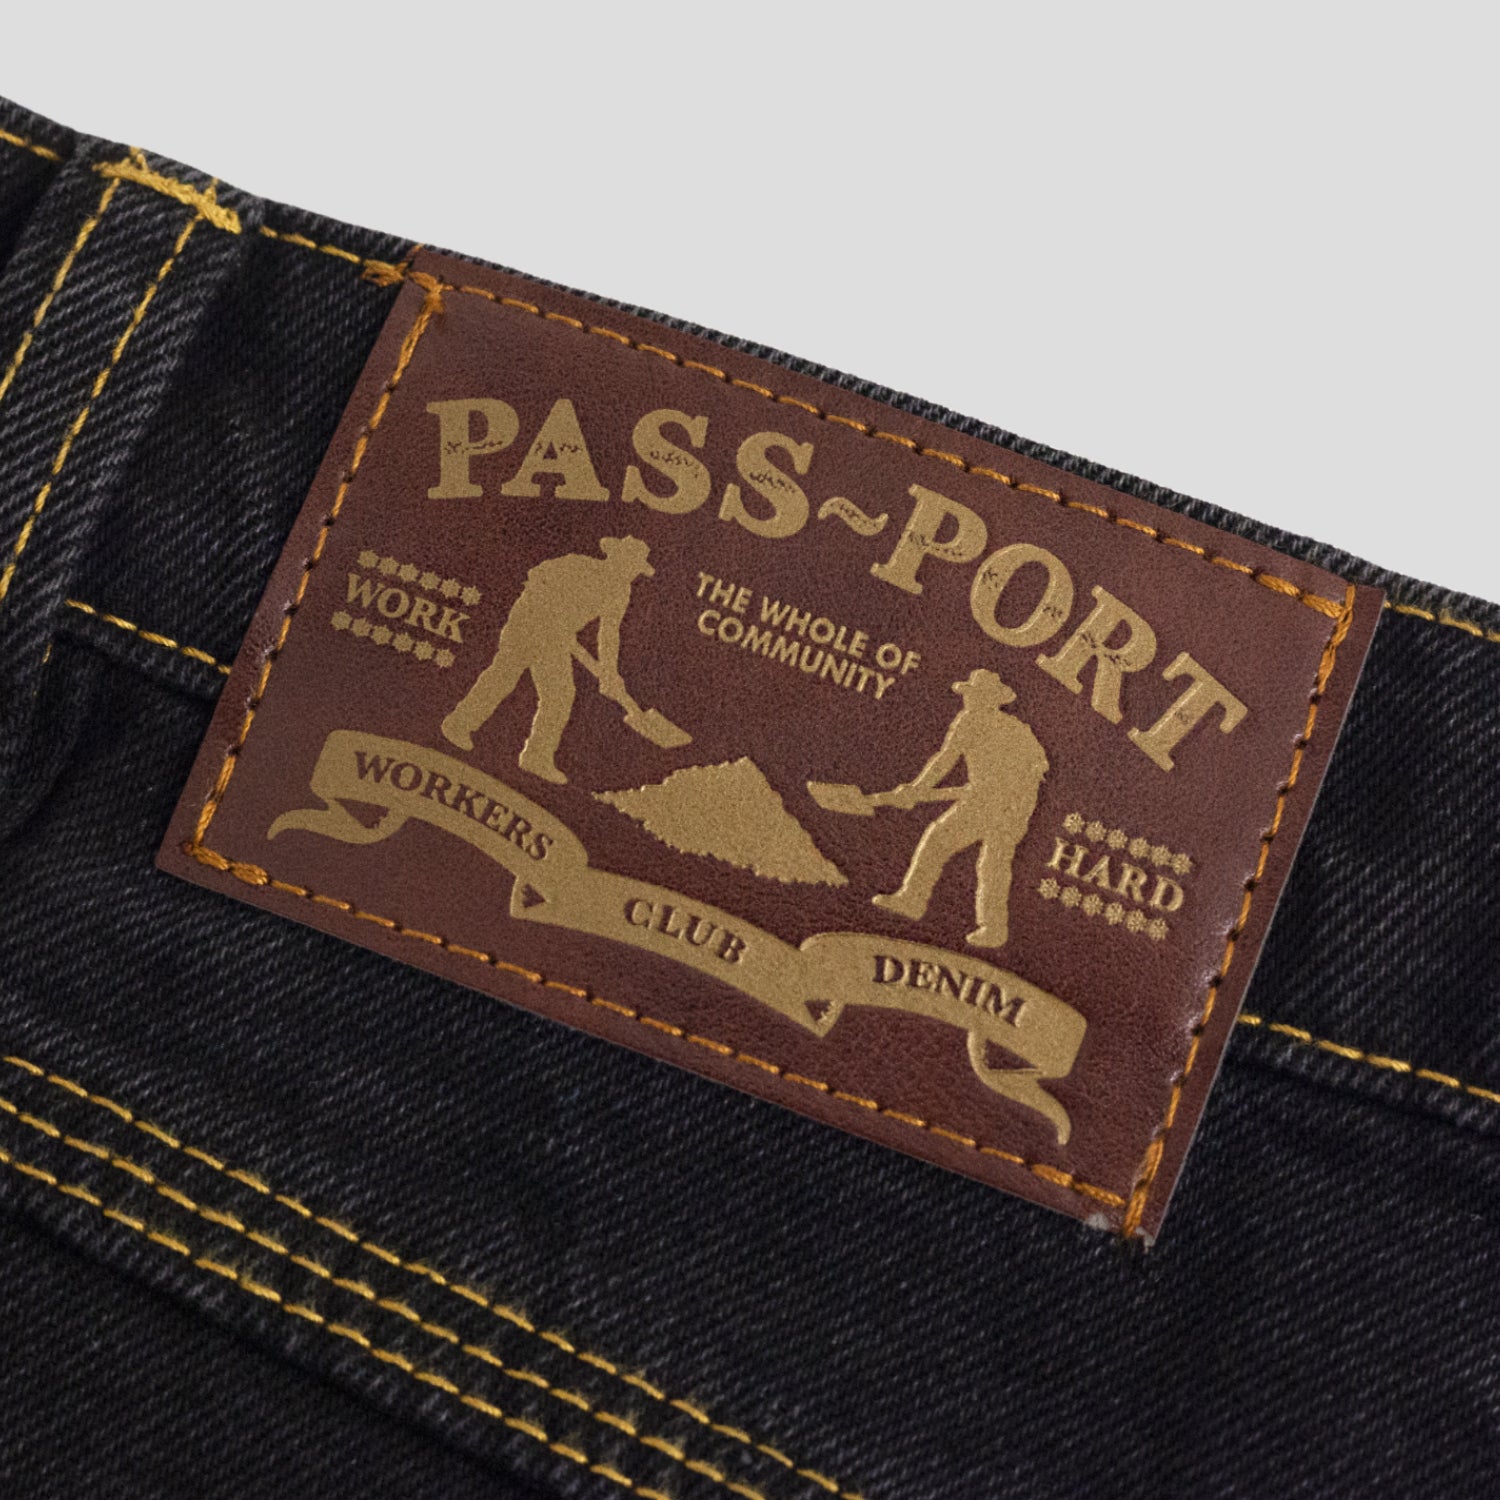 Pass~Port Workers Club Denim Jean - Washed Black